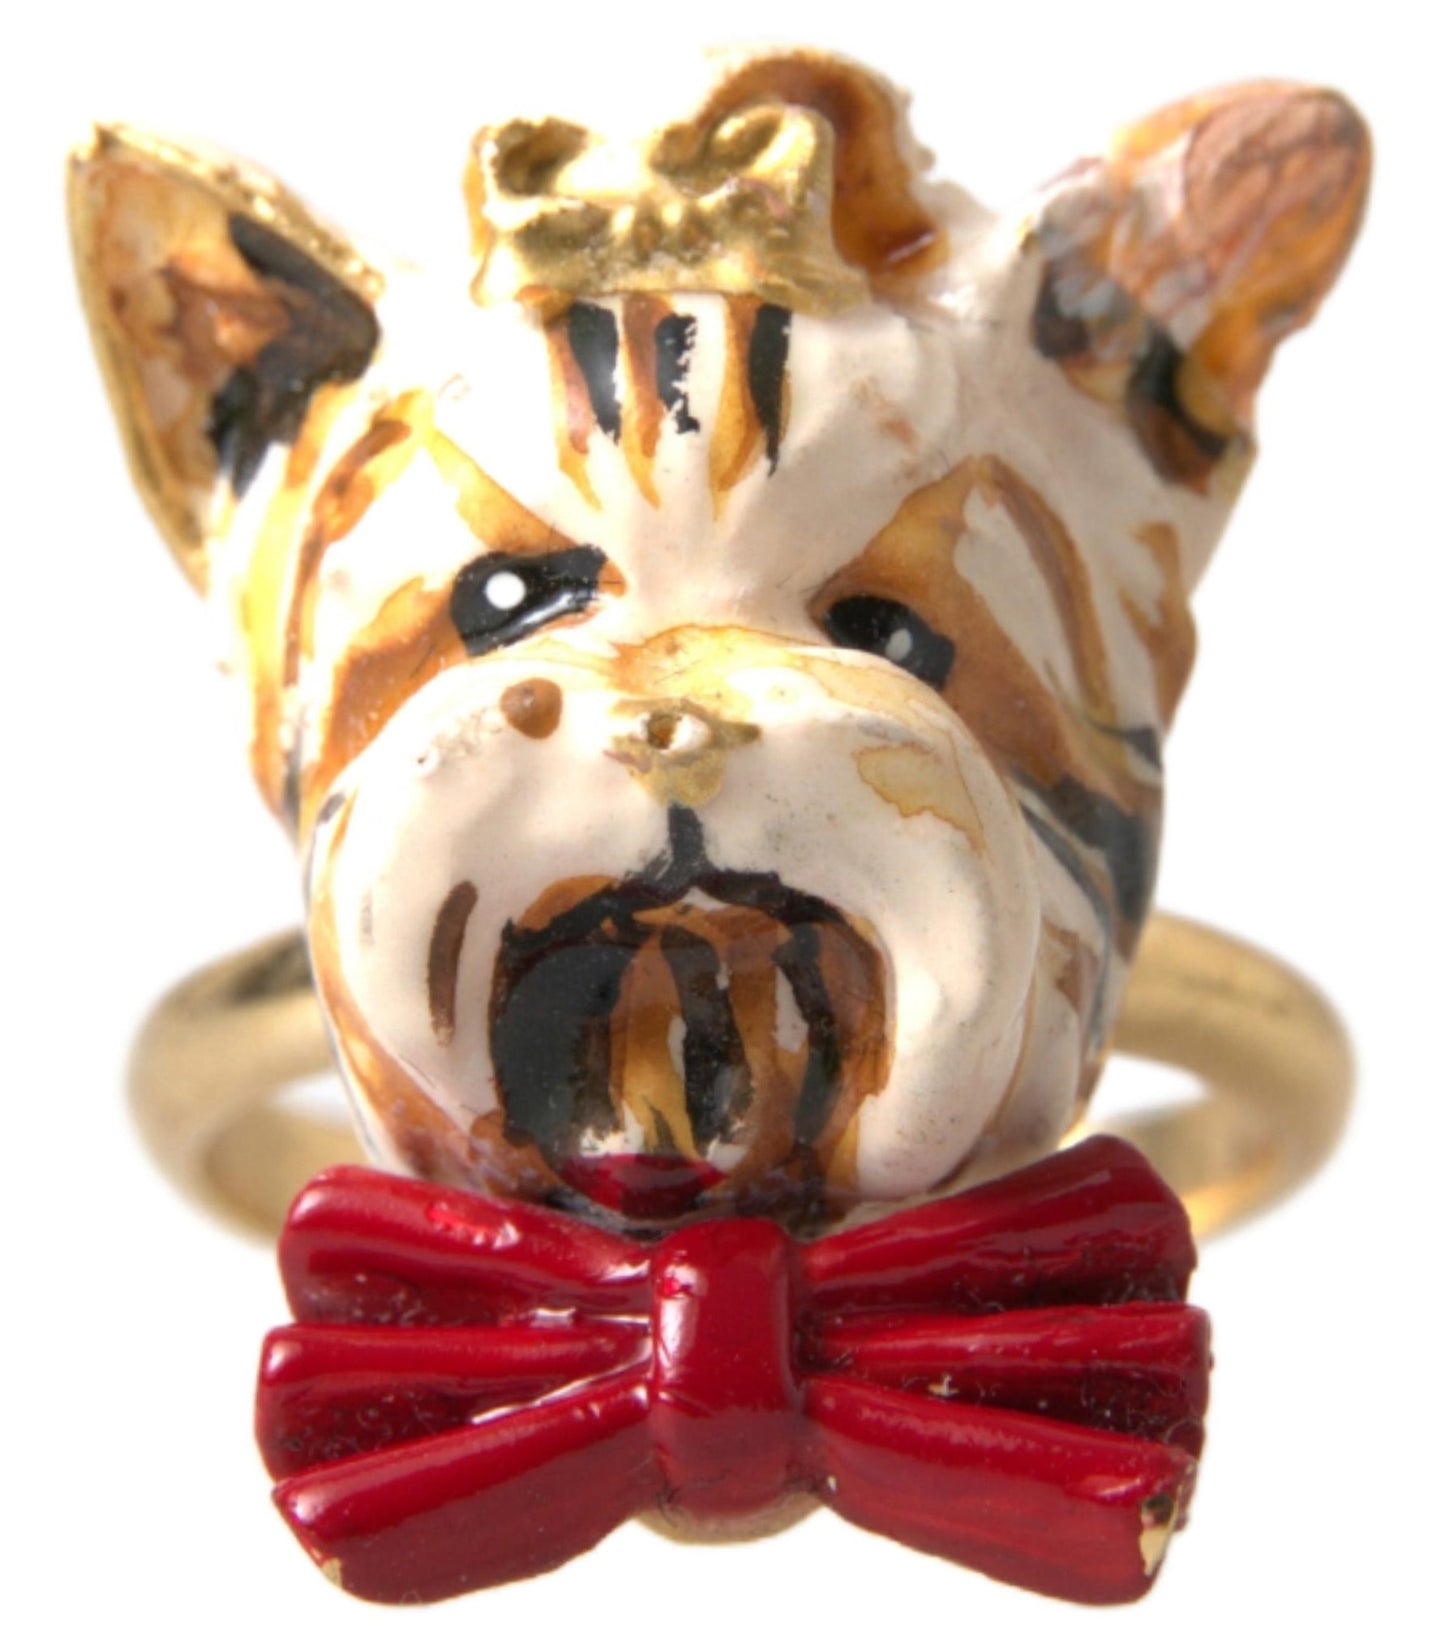 Golden Canine Chic Resin & Brass Ring